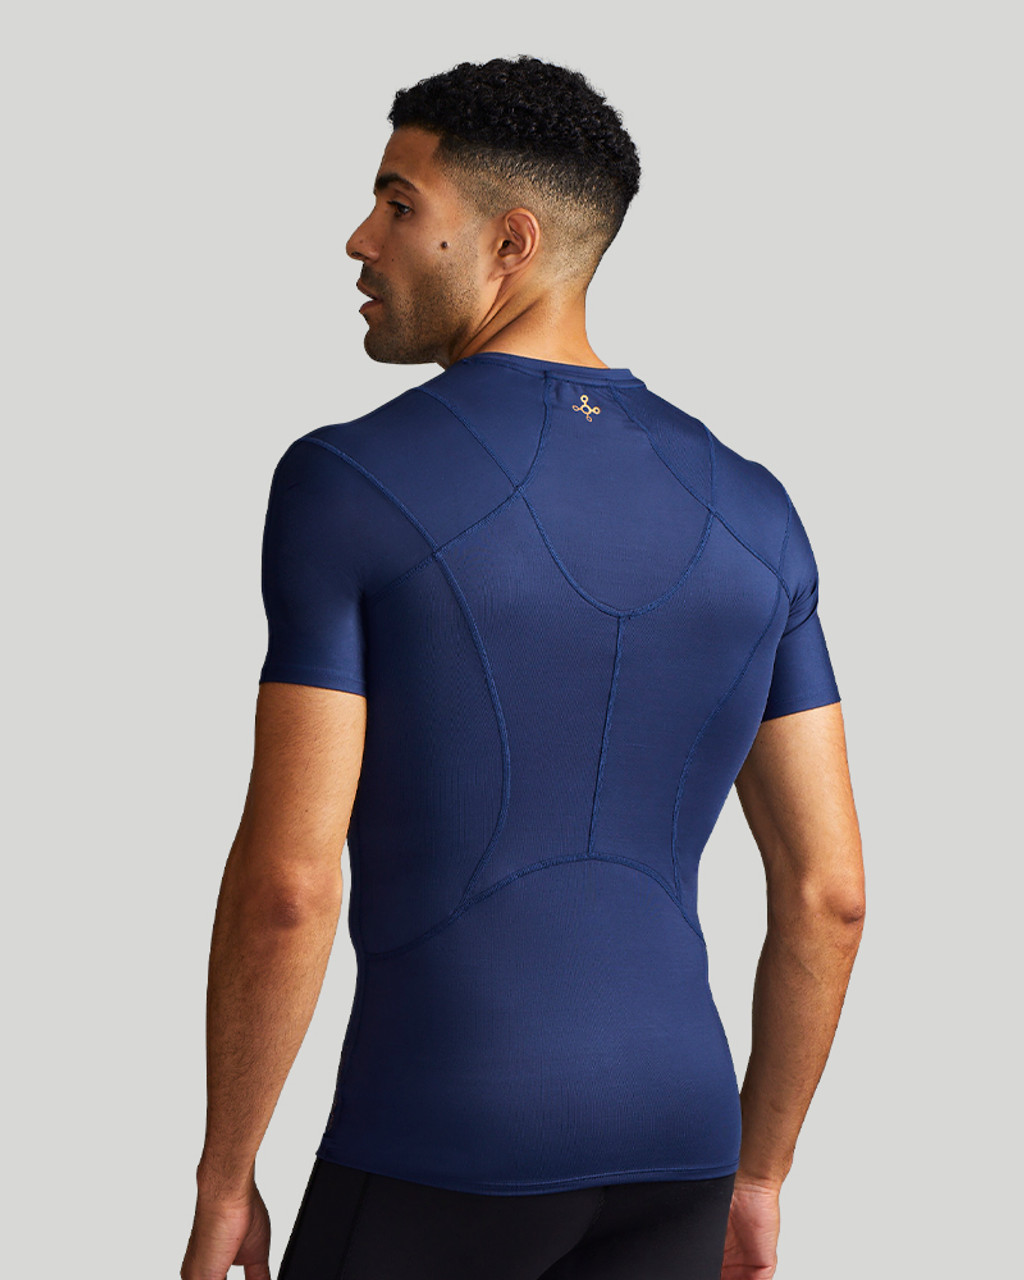 Improved Posture Performance Compression Shirt - Short Sleeve for